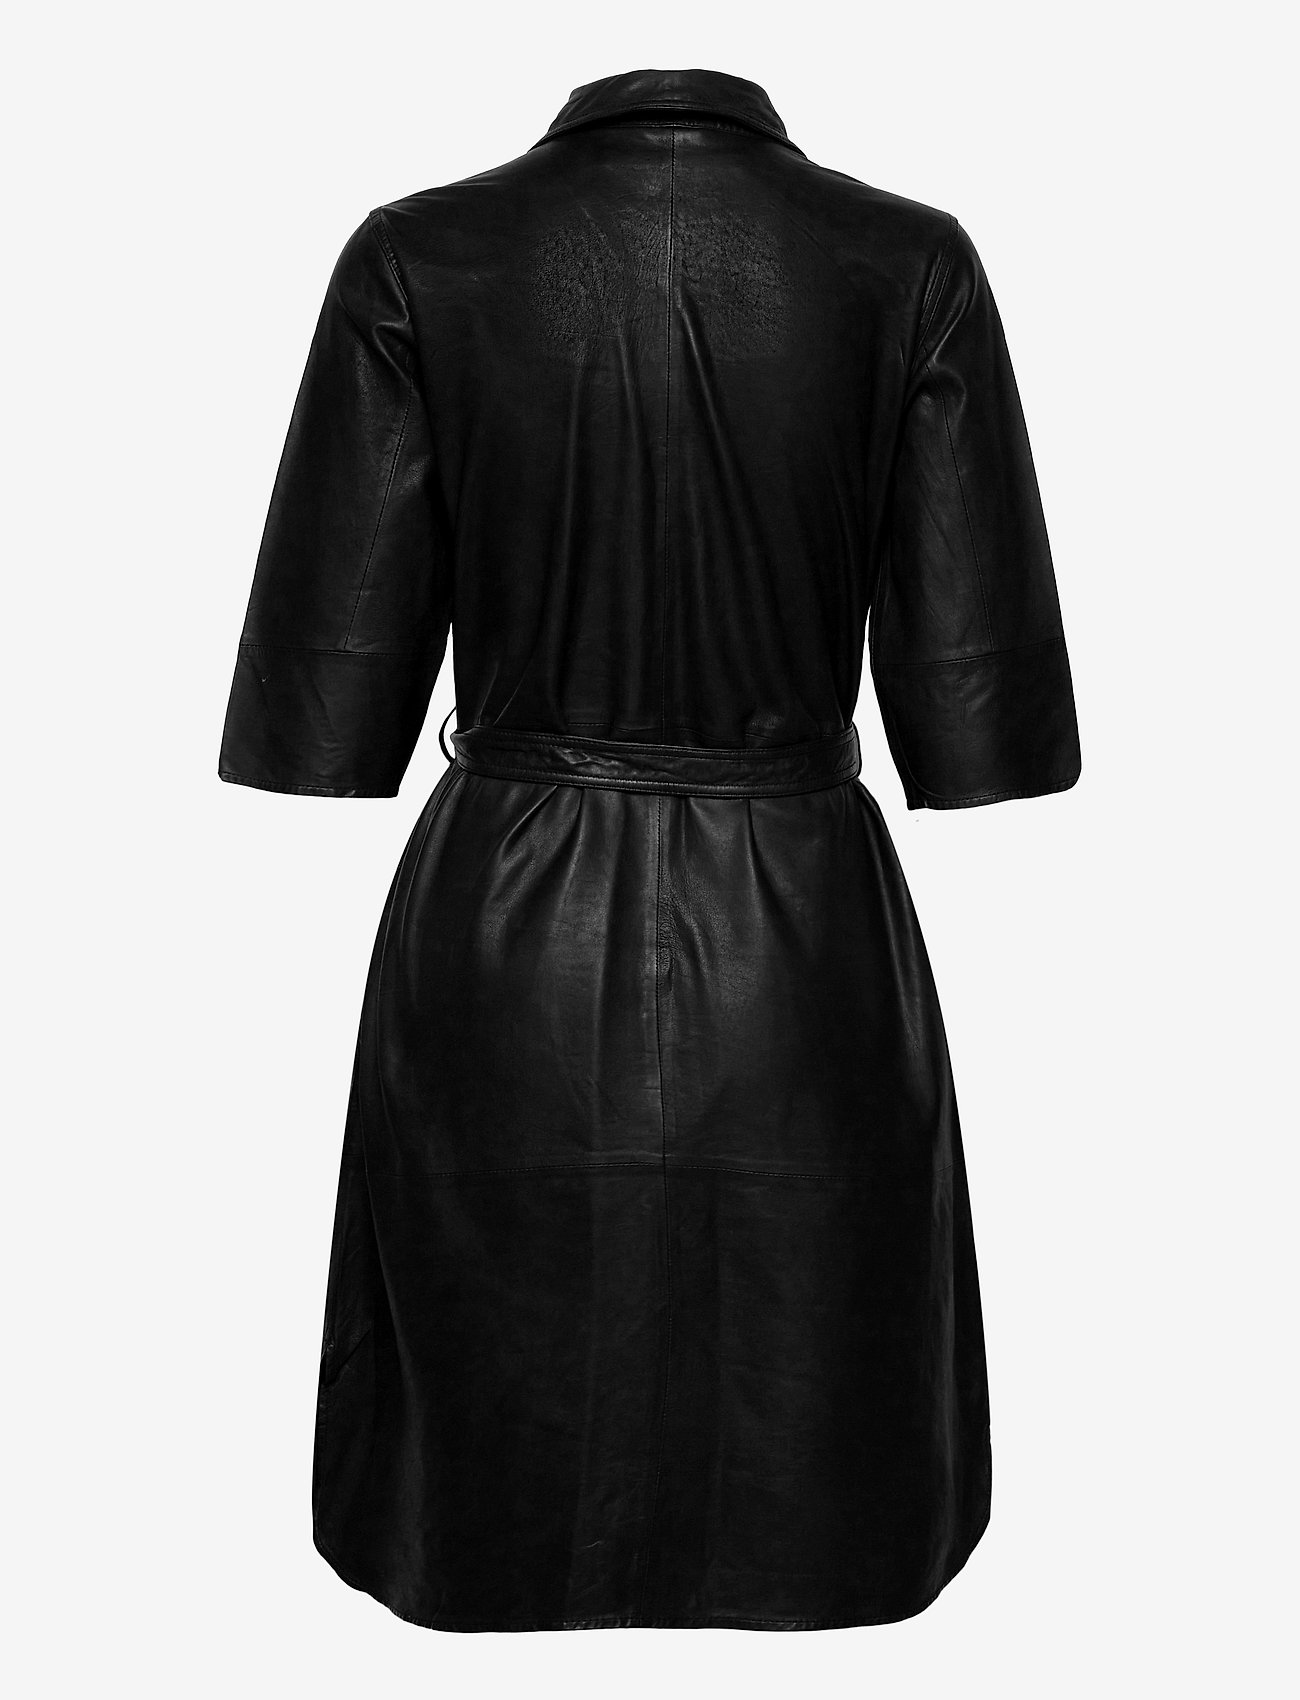 MDK / Munderingskompagniet - Clare thin leather dress - everyday dresses - black - 1